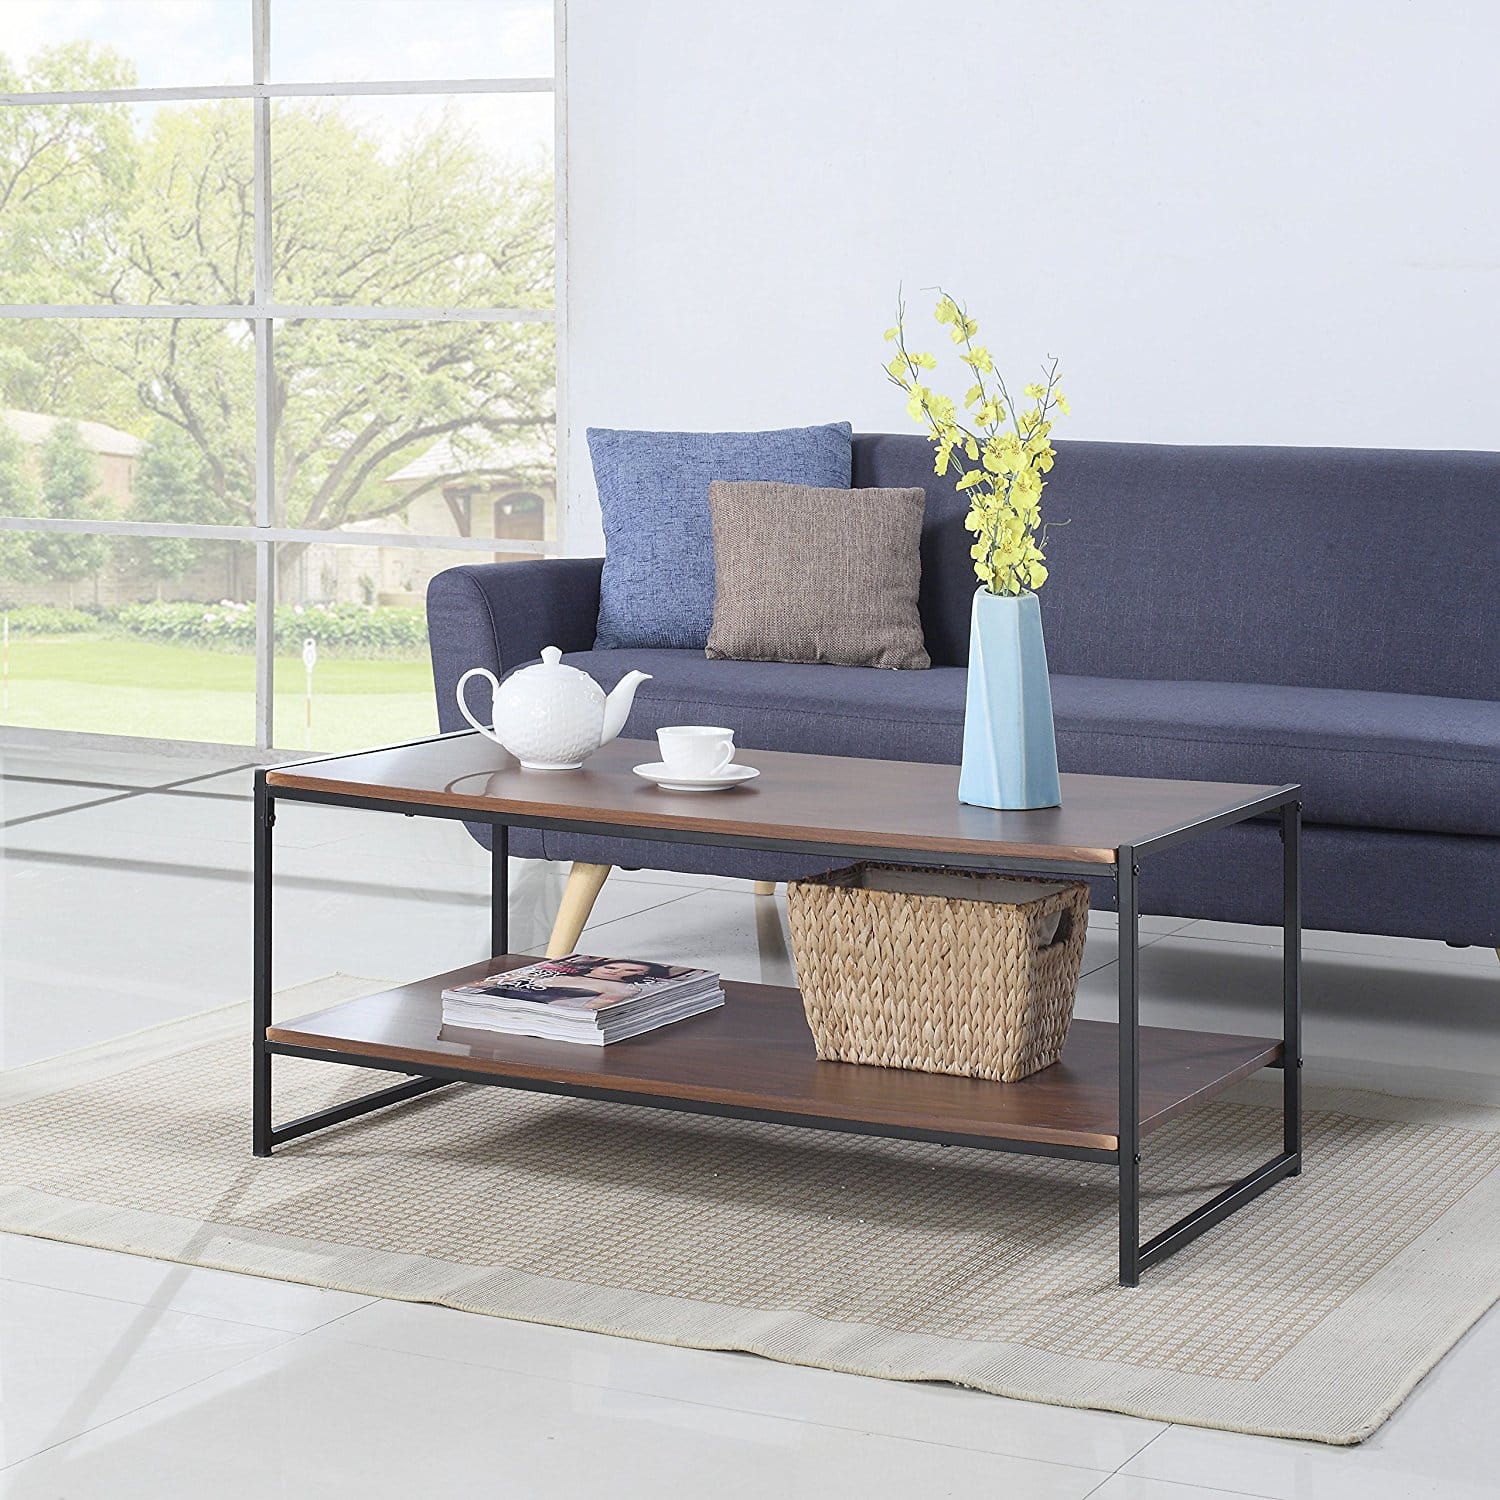 A modern rectangular coffee table